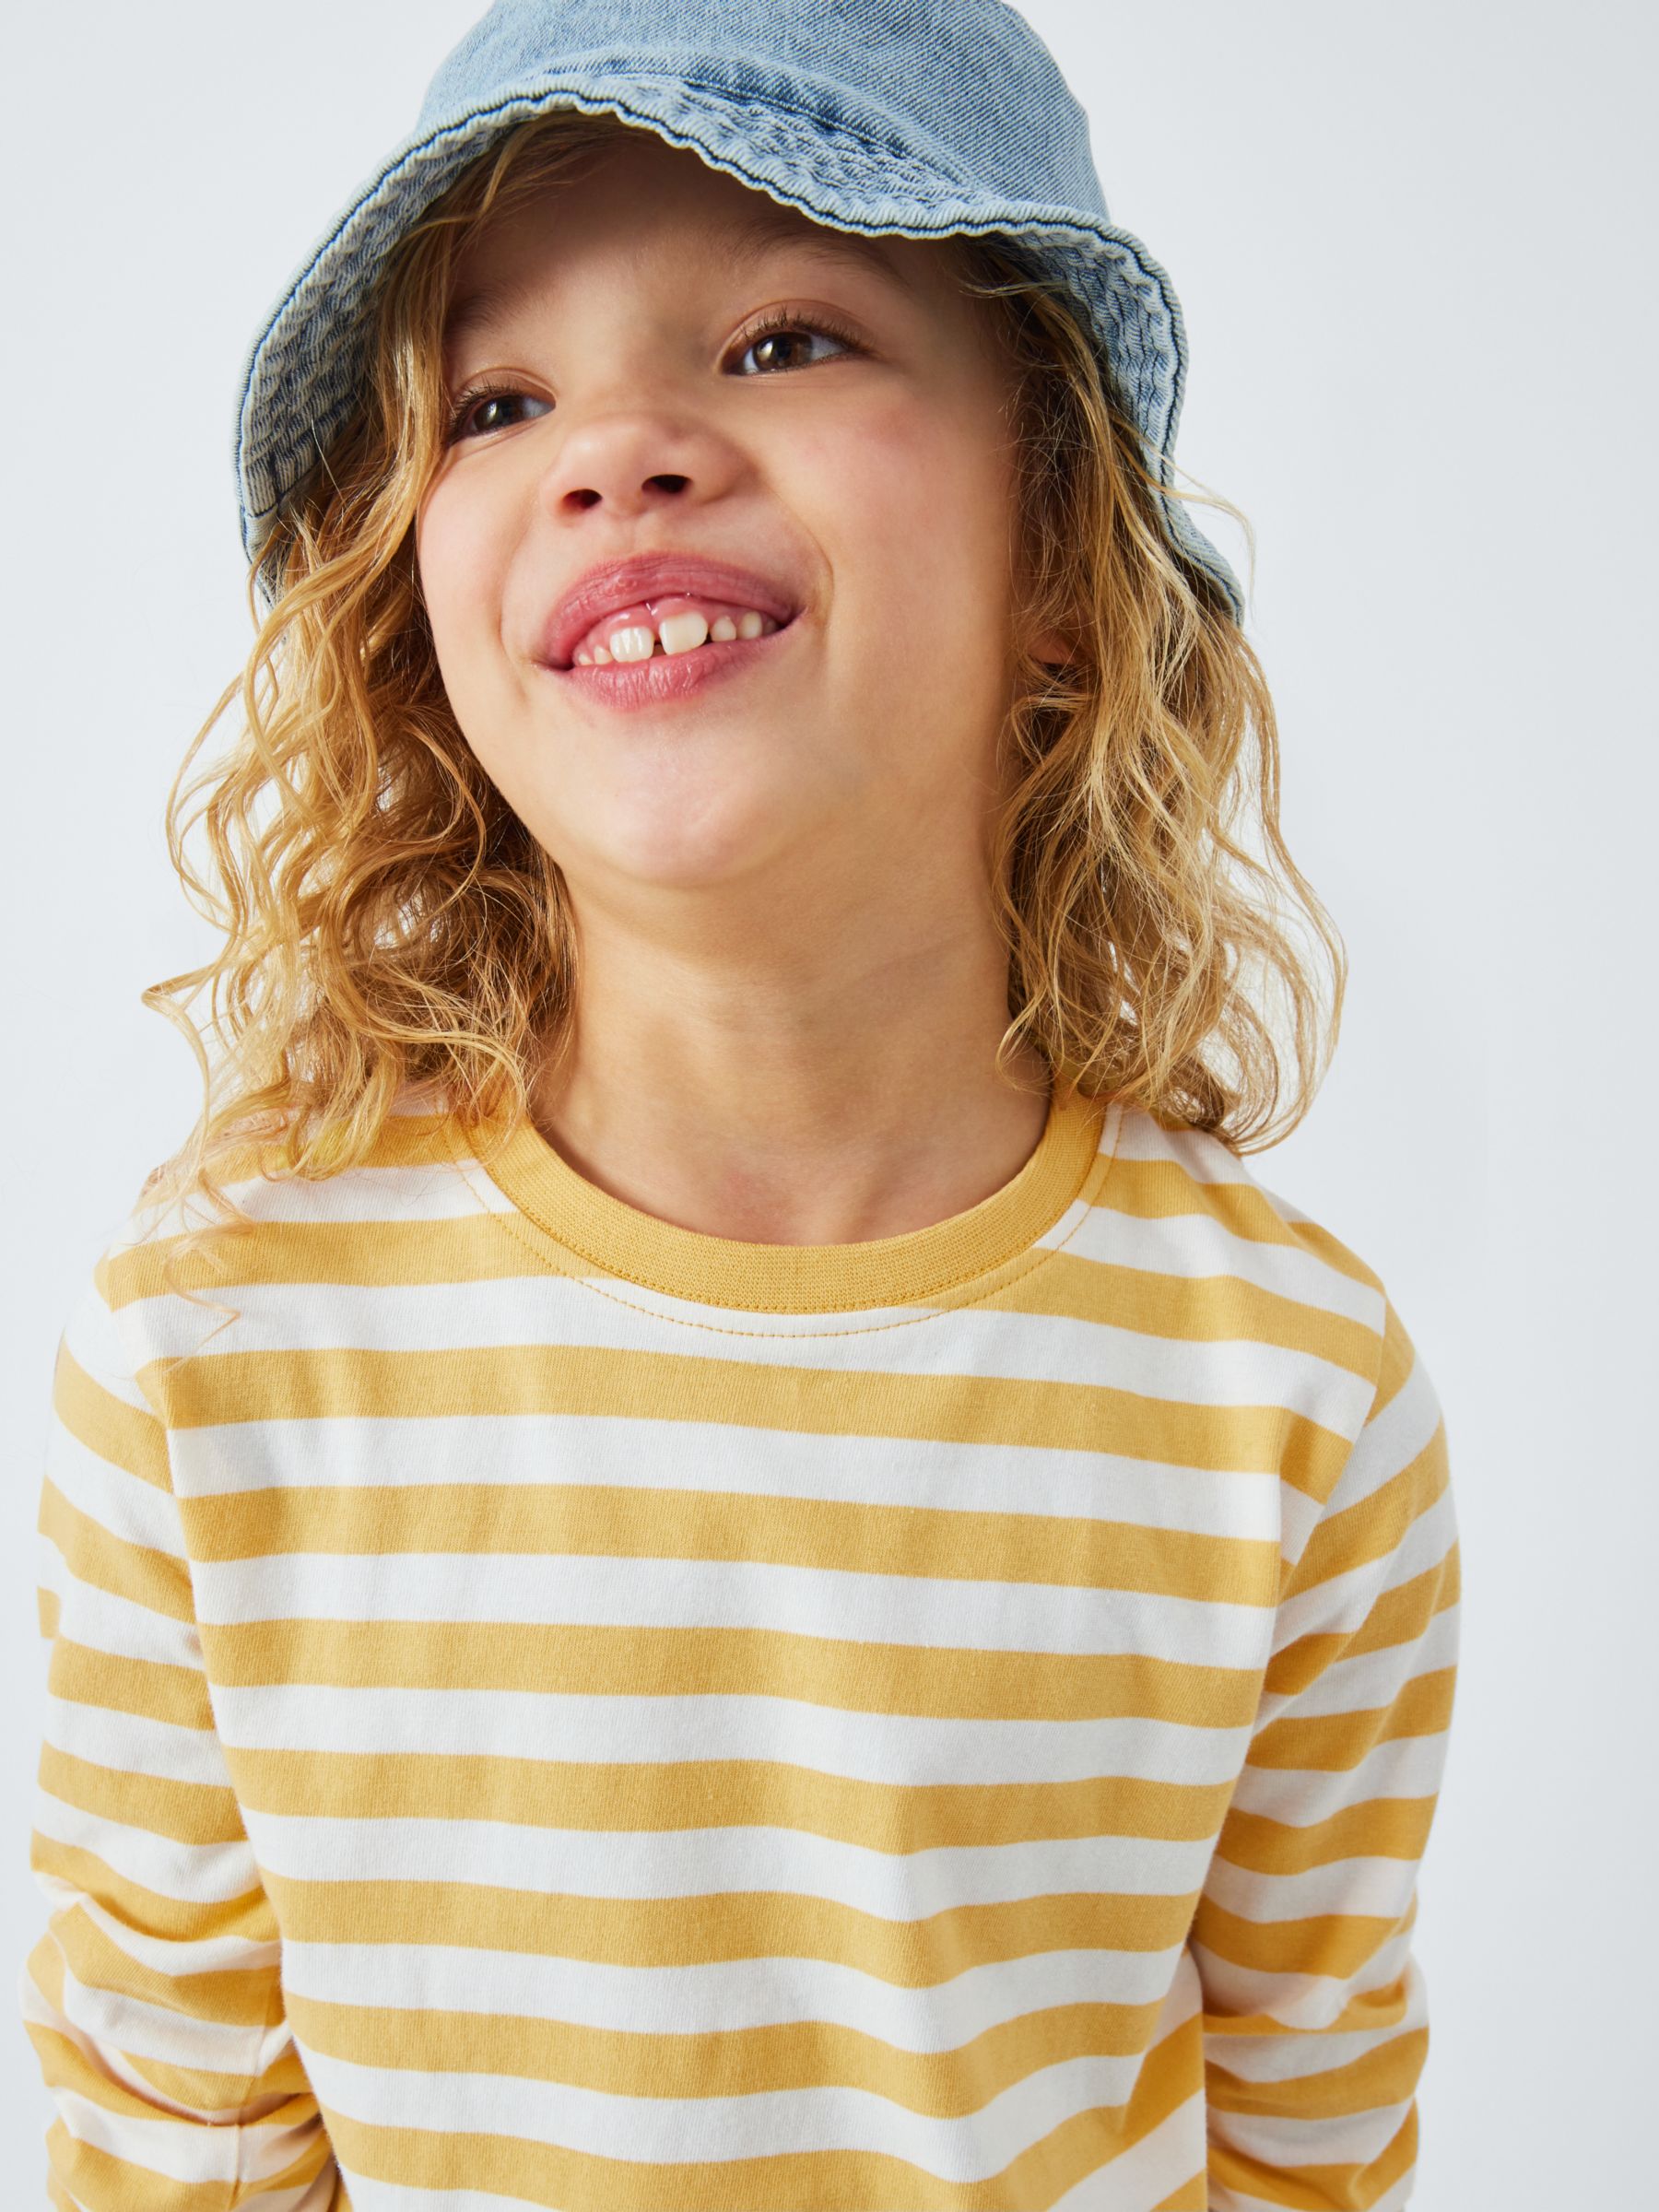 John Lewis ANYDAY Kids' Breton Stripe Long Sleeve T-Shirt, Sundress, 2 years